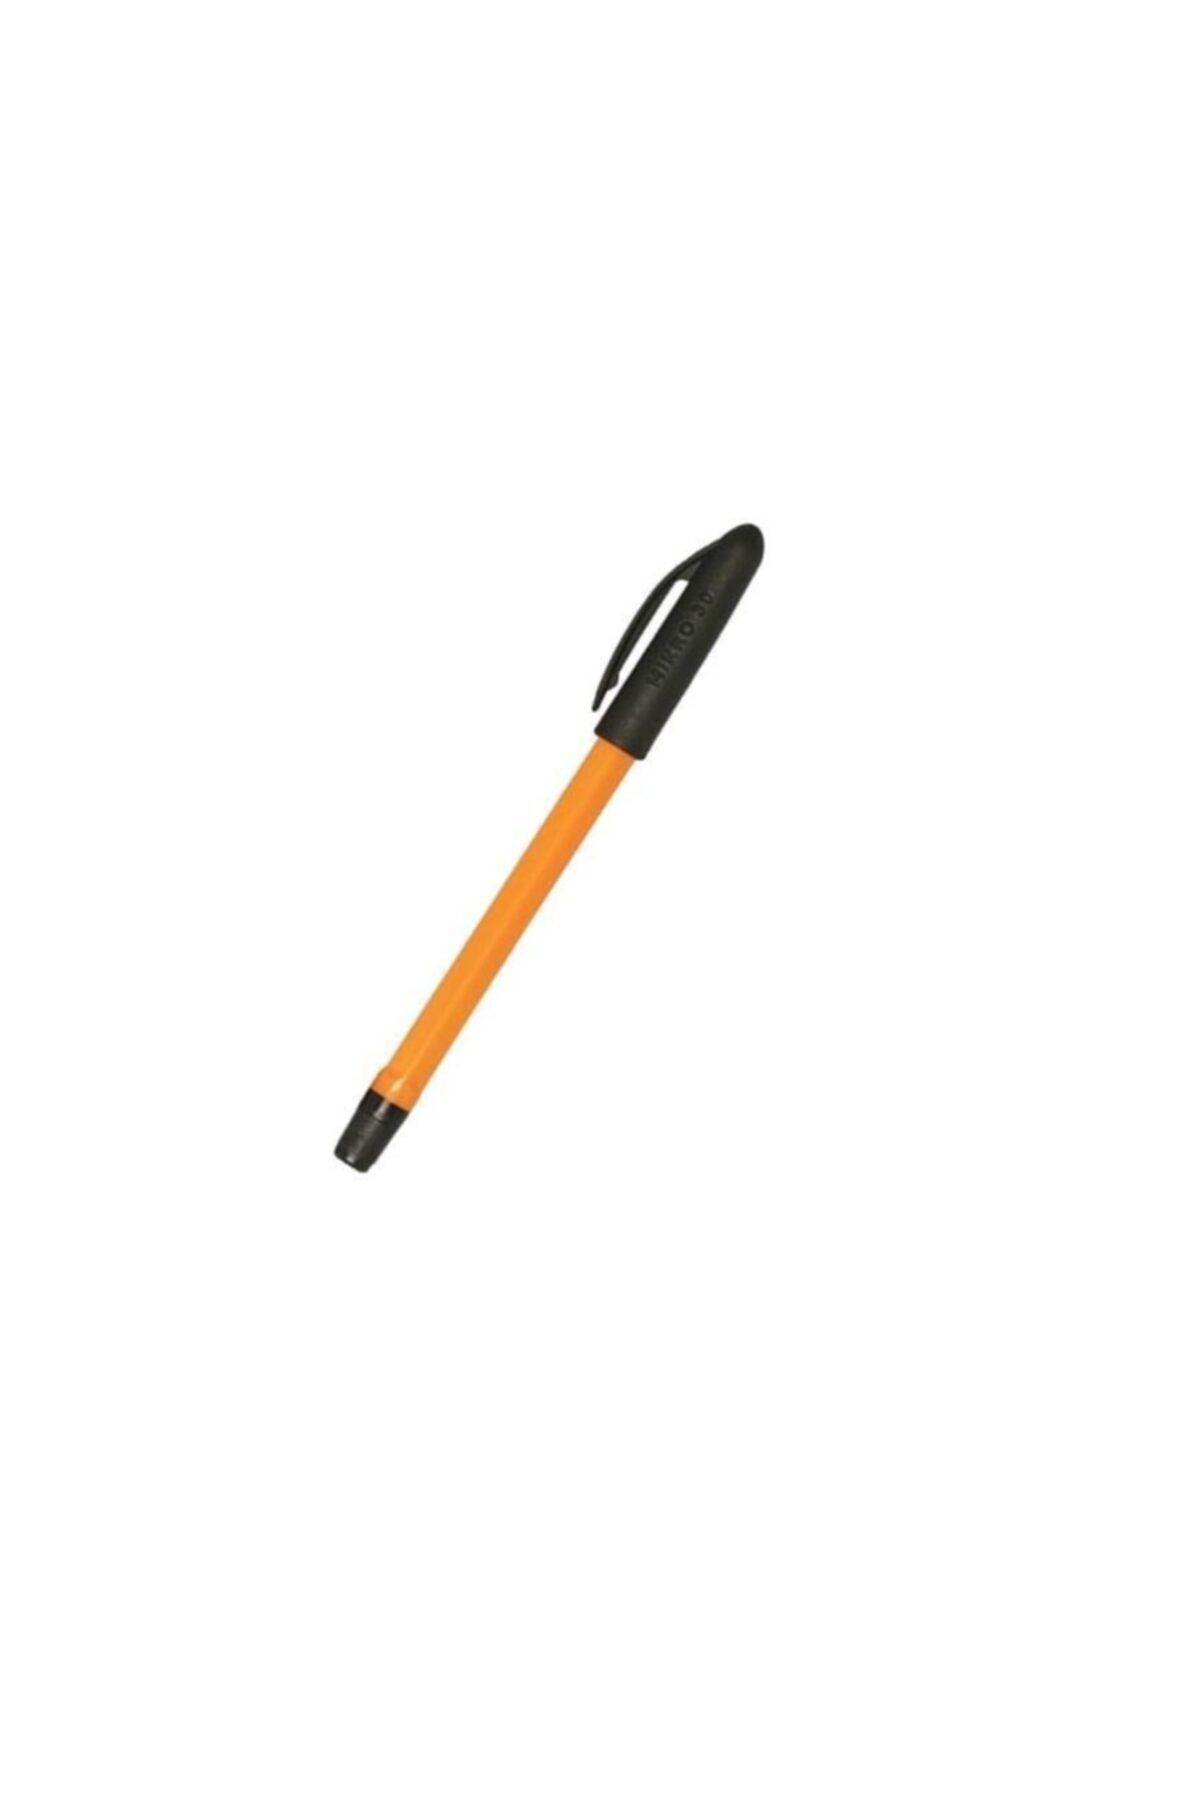 Mikro Siyah Tükenmez Kalem 3 Adet 1.0mm Uç Tükenmez Kalem 3 Adet Siyah Renk 1.0mm